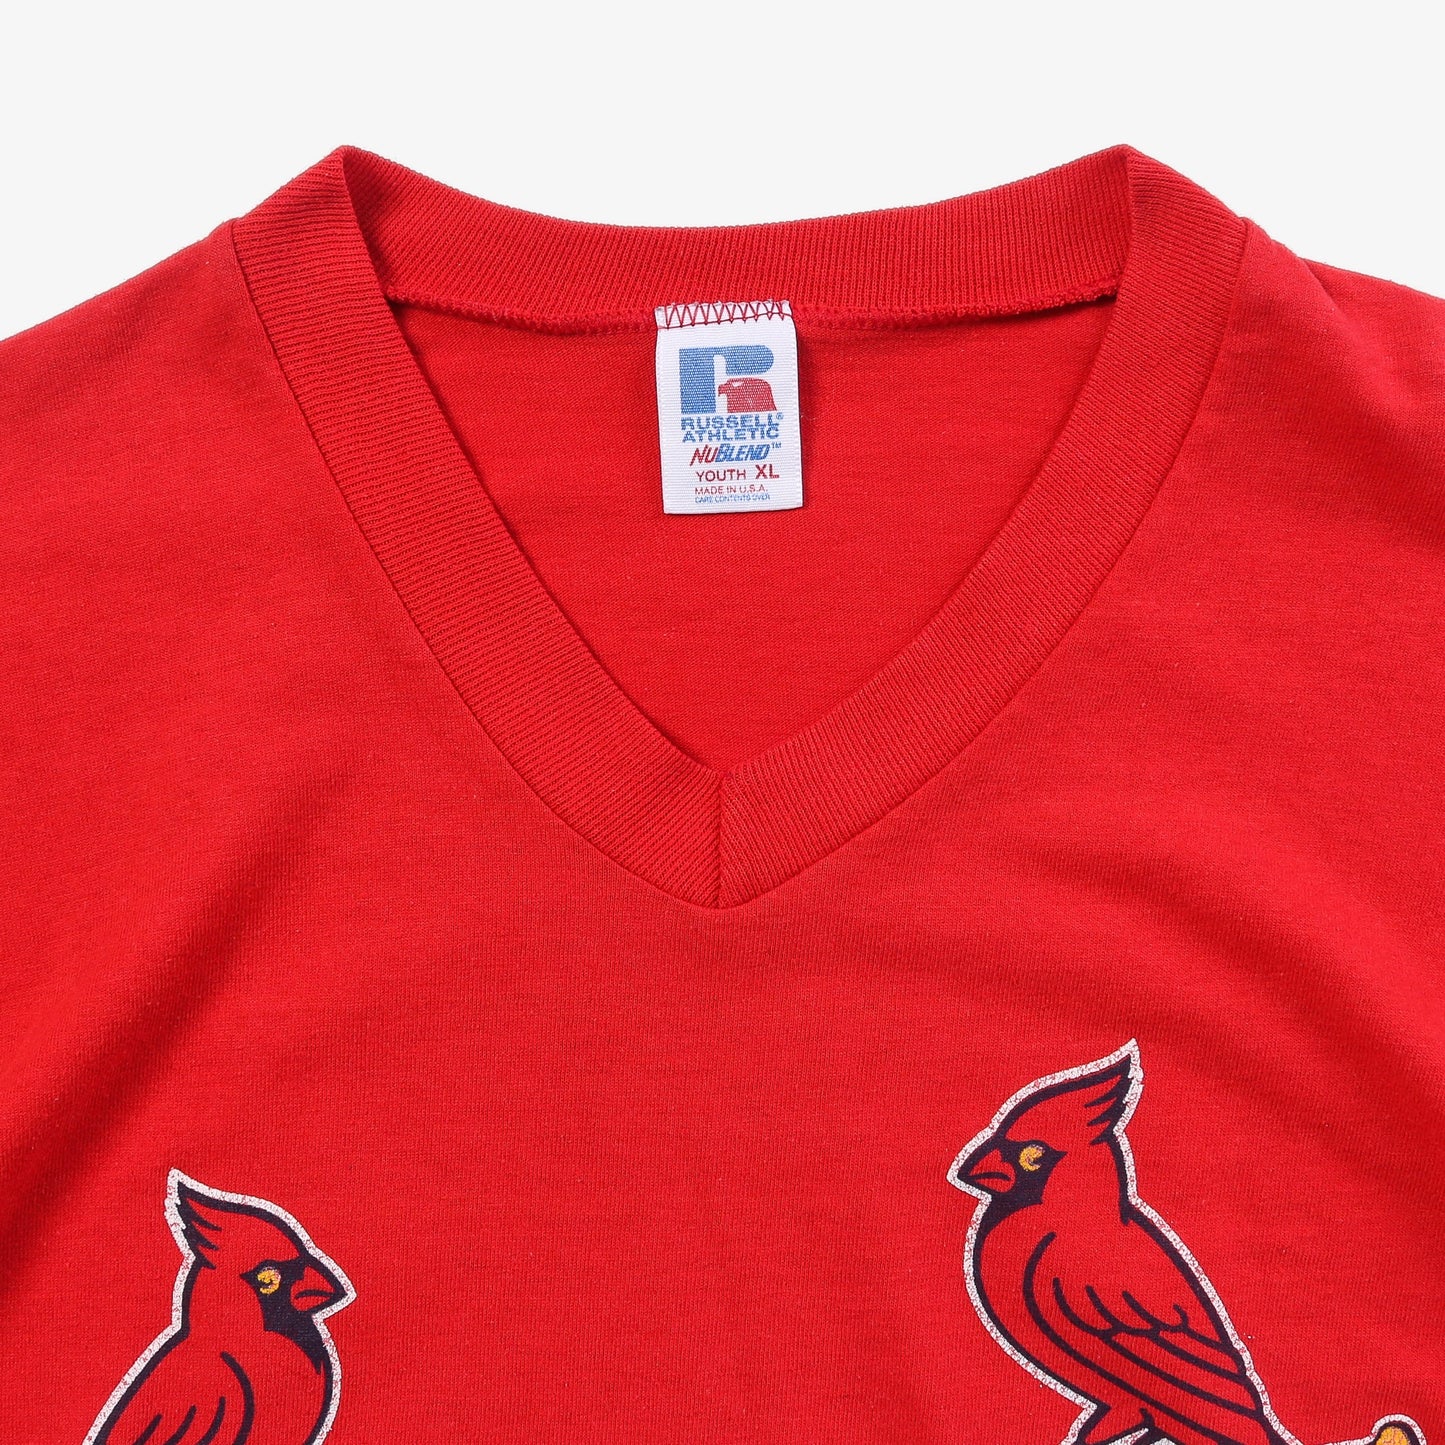 Vintage 'Cardinals' T-shirt - American Madness